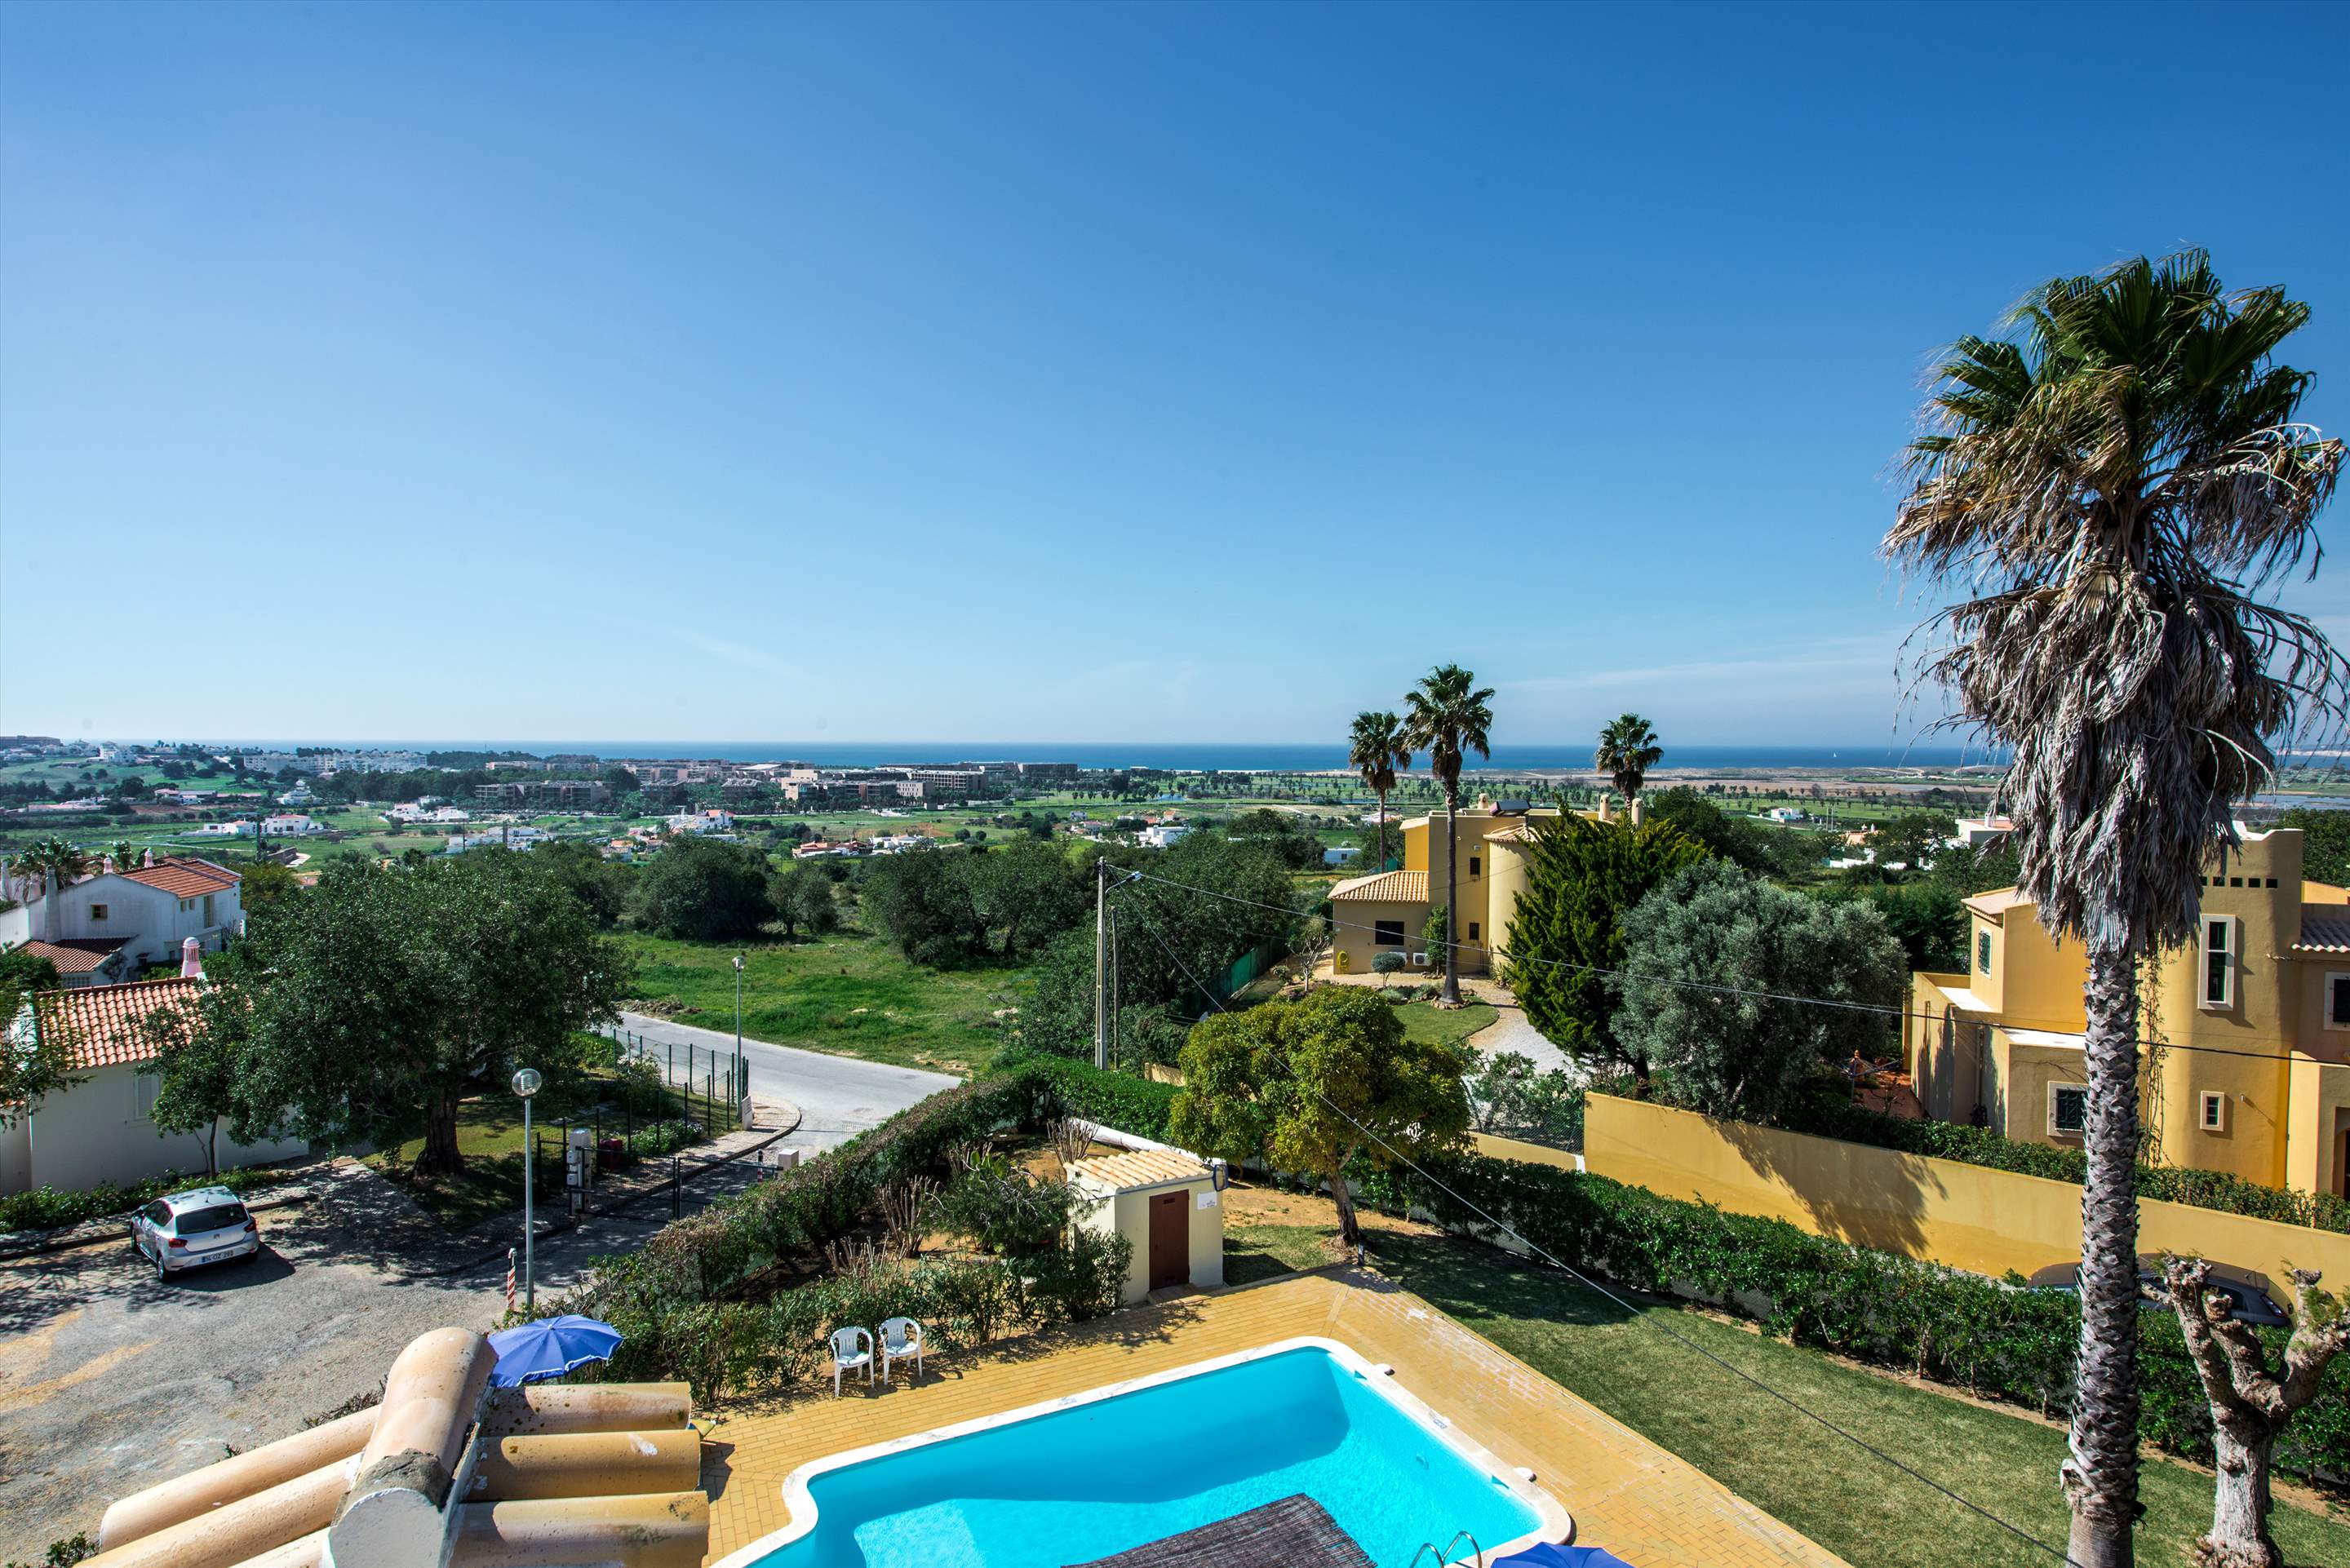 Villa Amendoeira, 7 to 8 persons rate, 4 bedroom villa in Gale, Vale da Parra and Guia, Algarve Photo #10